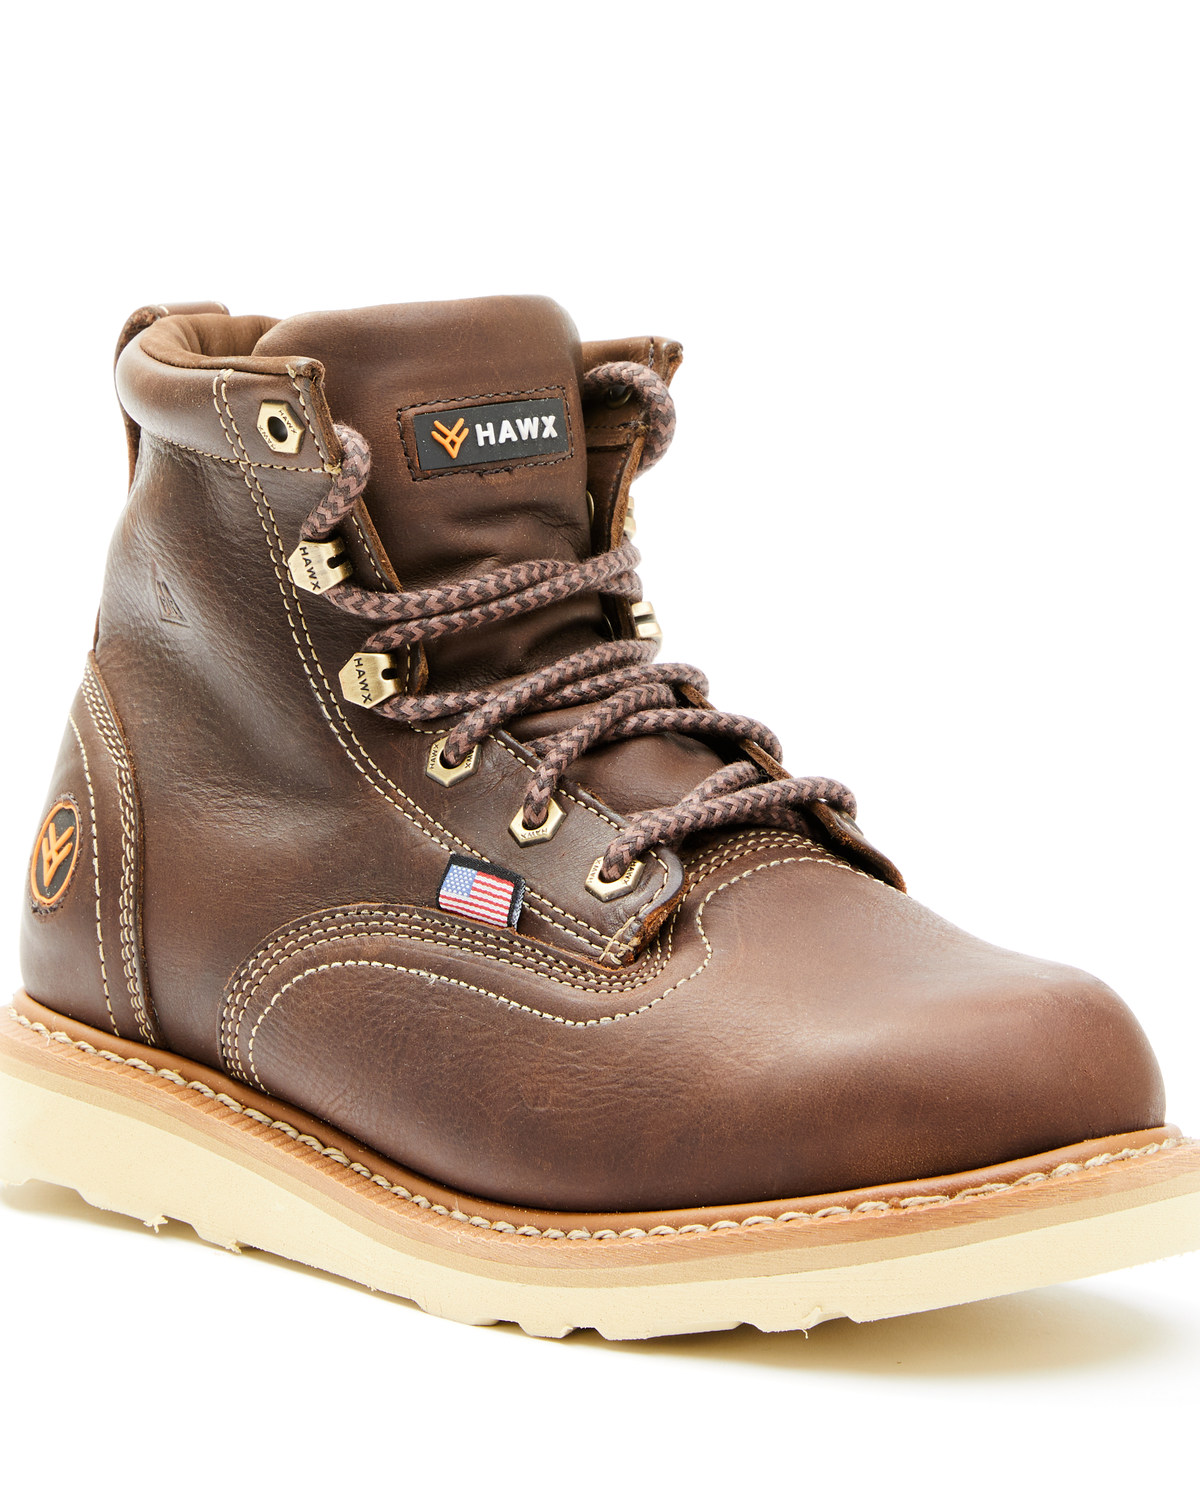 Hawx Men's USA Wedge Work Boots - Soft Toe